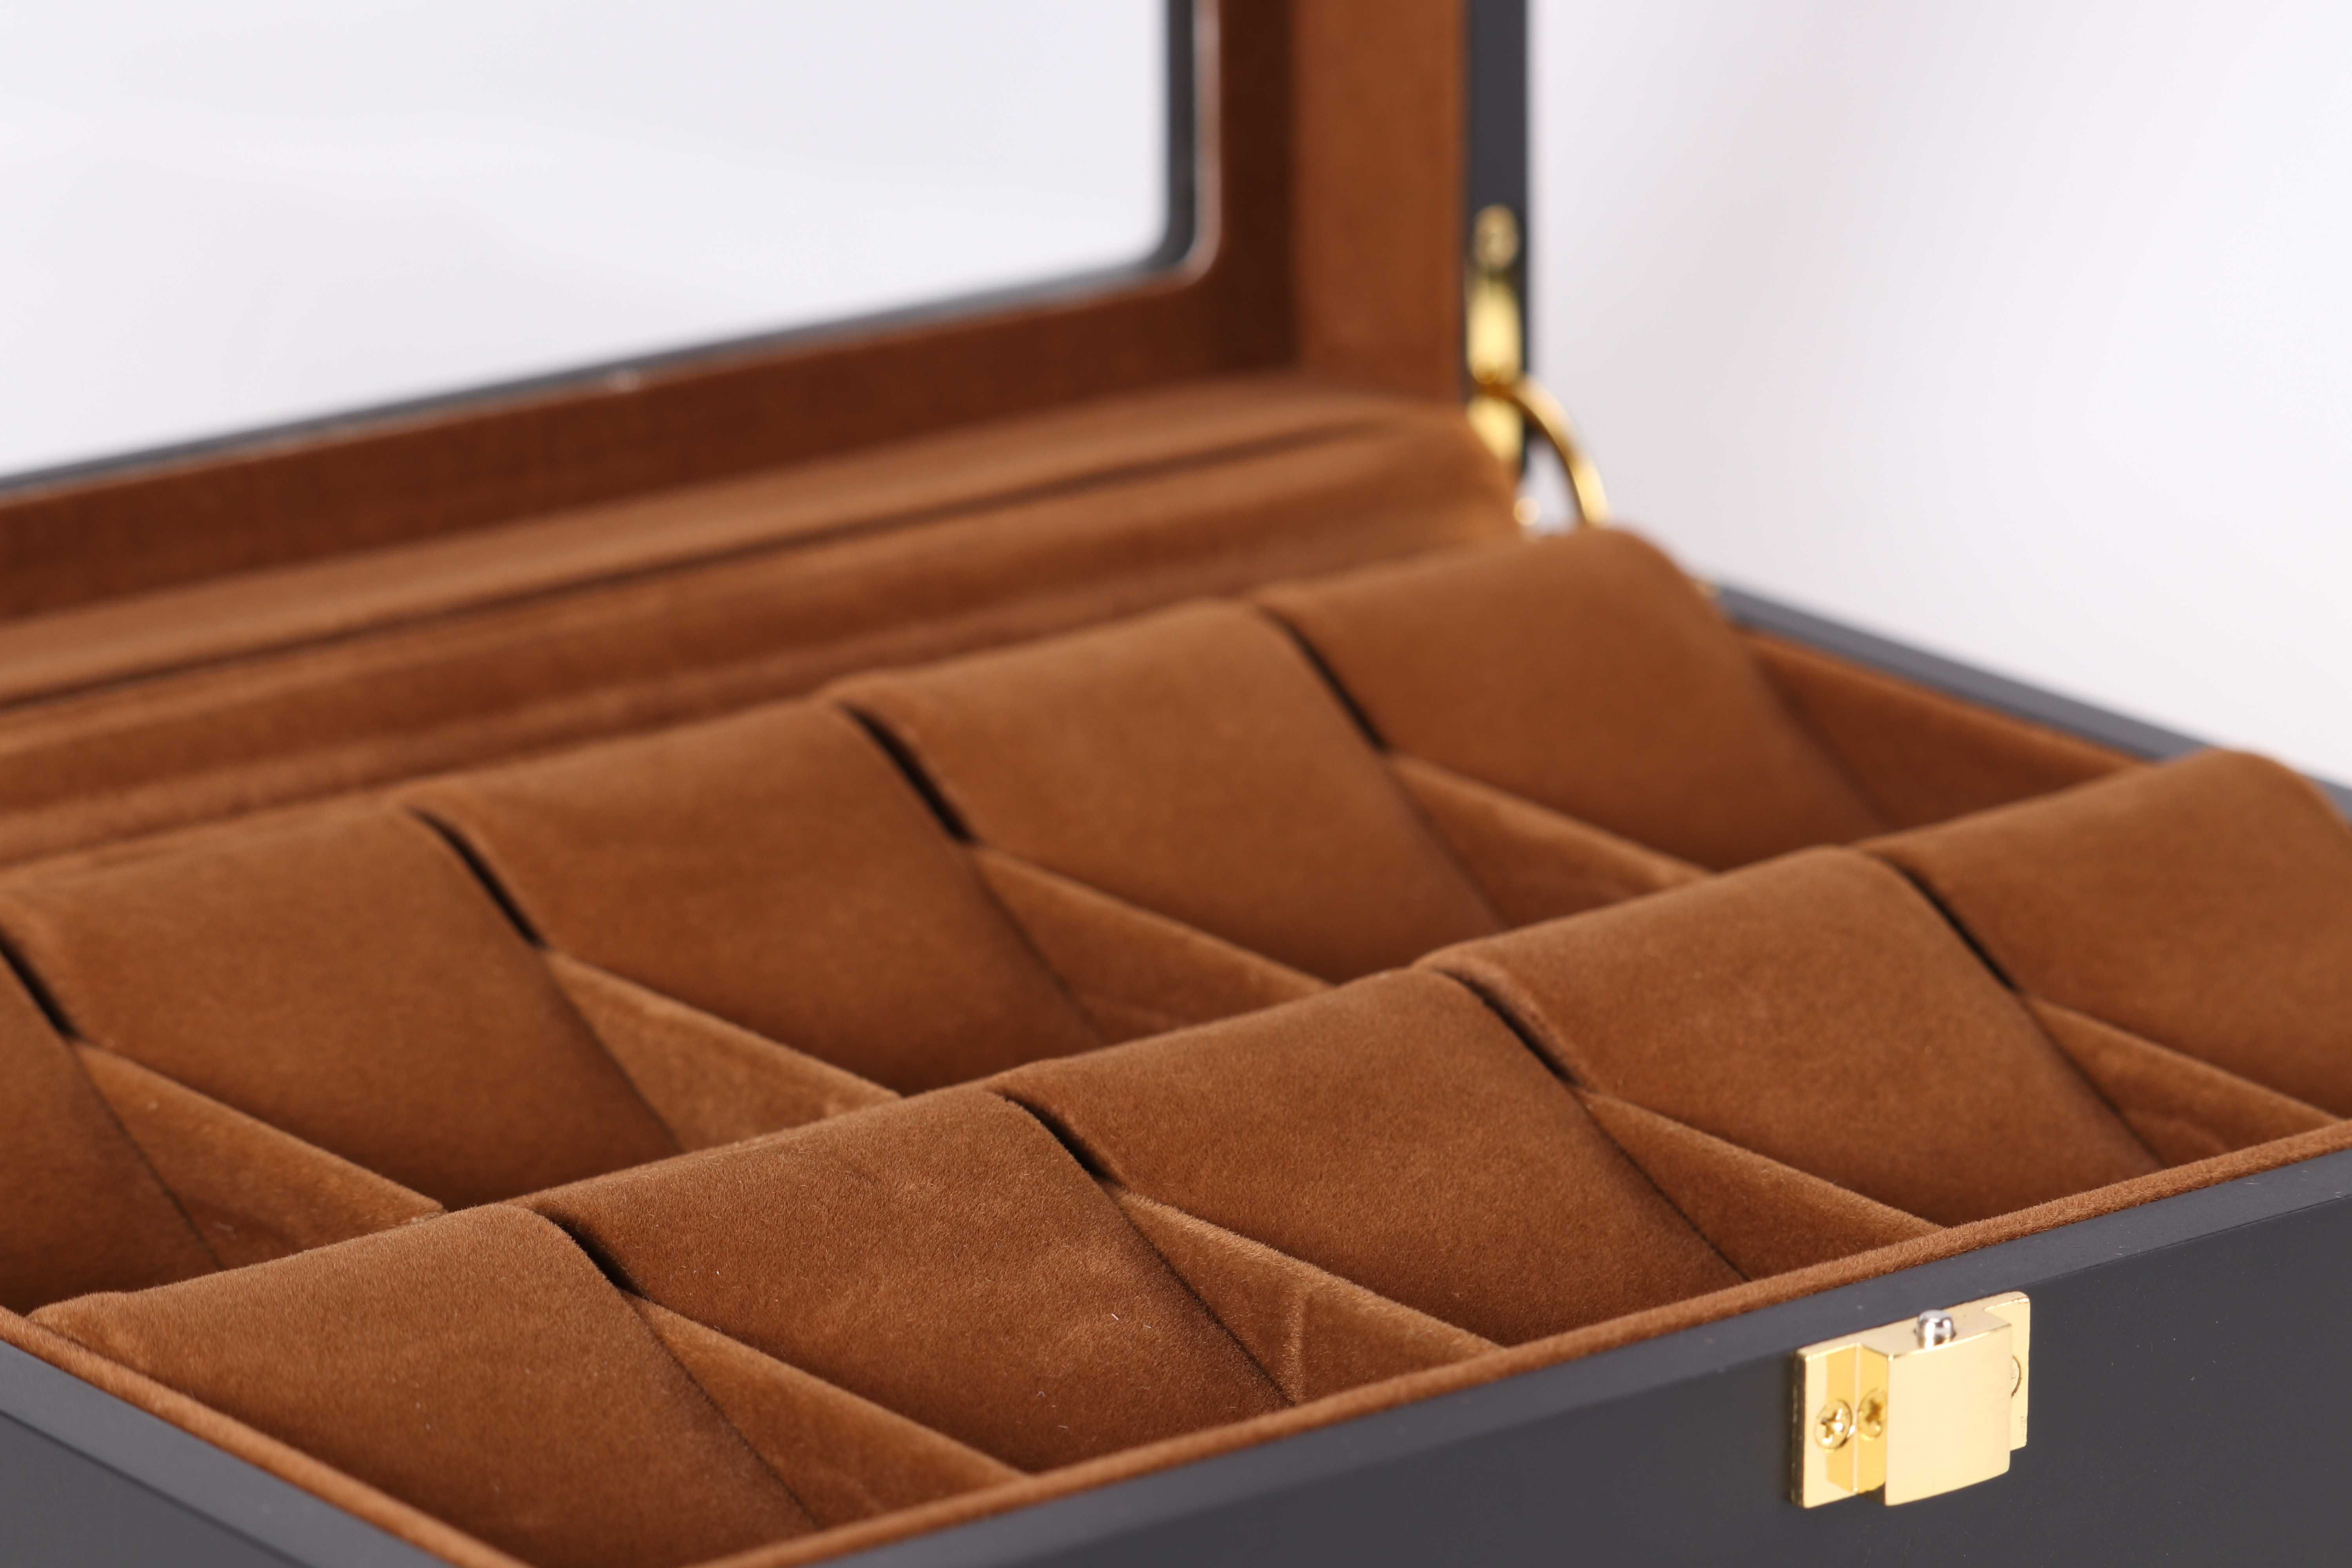 Скринька для годинників / кейс коробка шкатулка хранения бокс часов